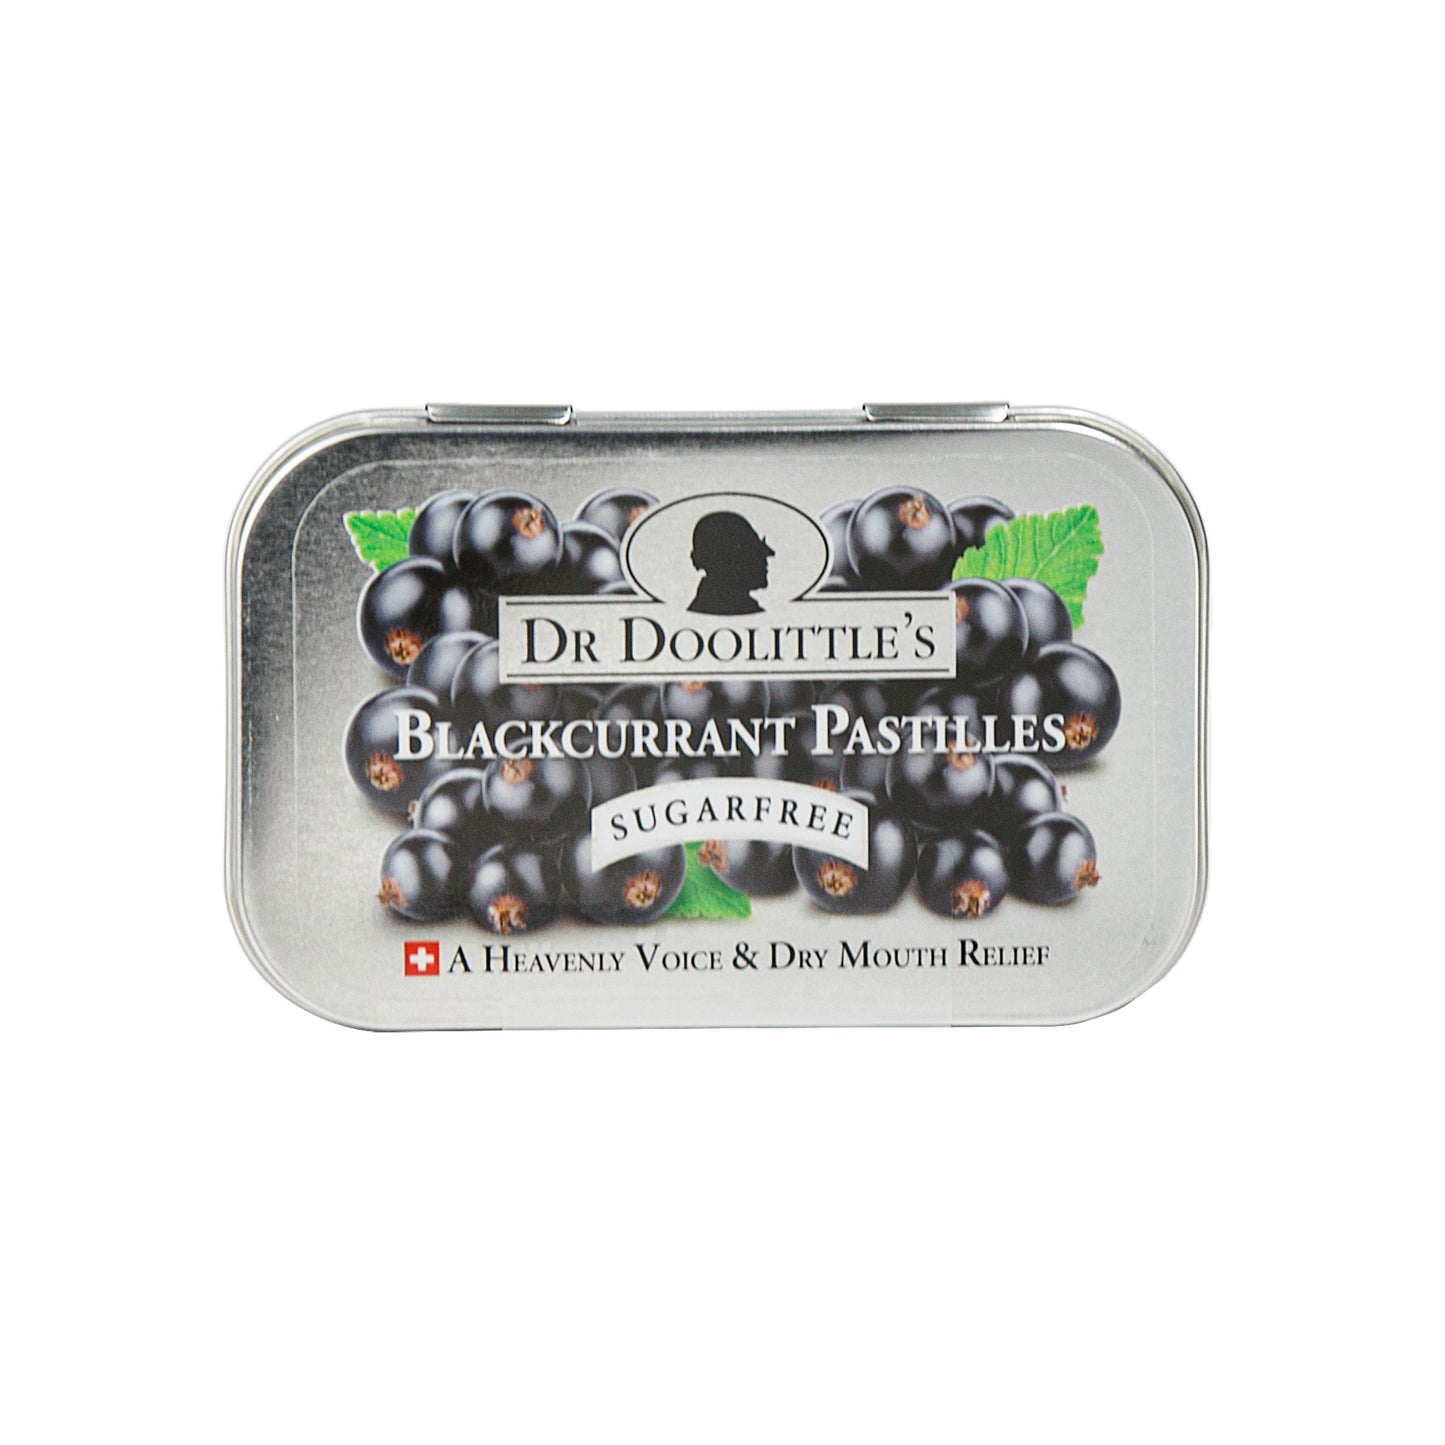 Primary image of Blackcurrant Pastilles Sugar Free